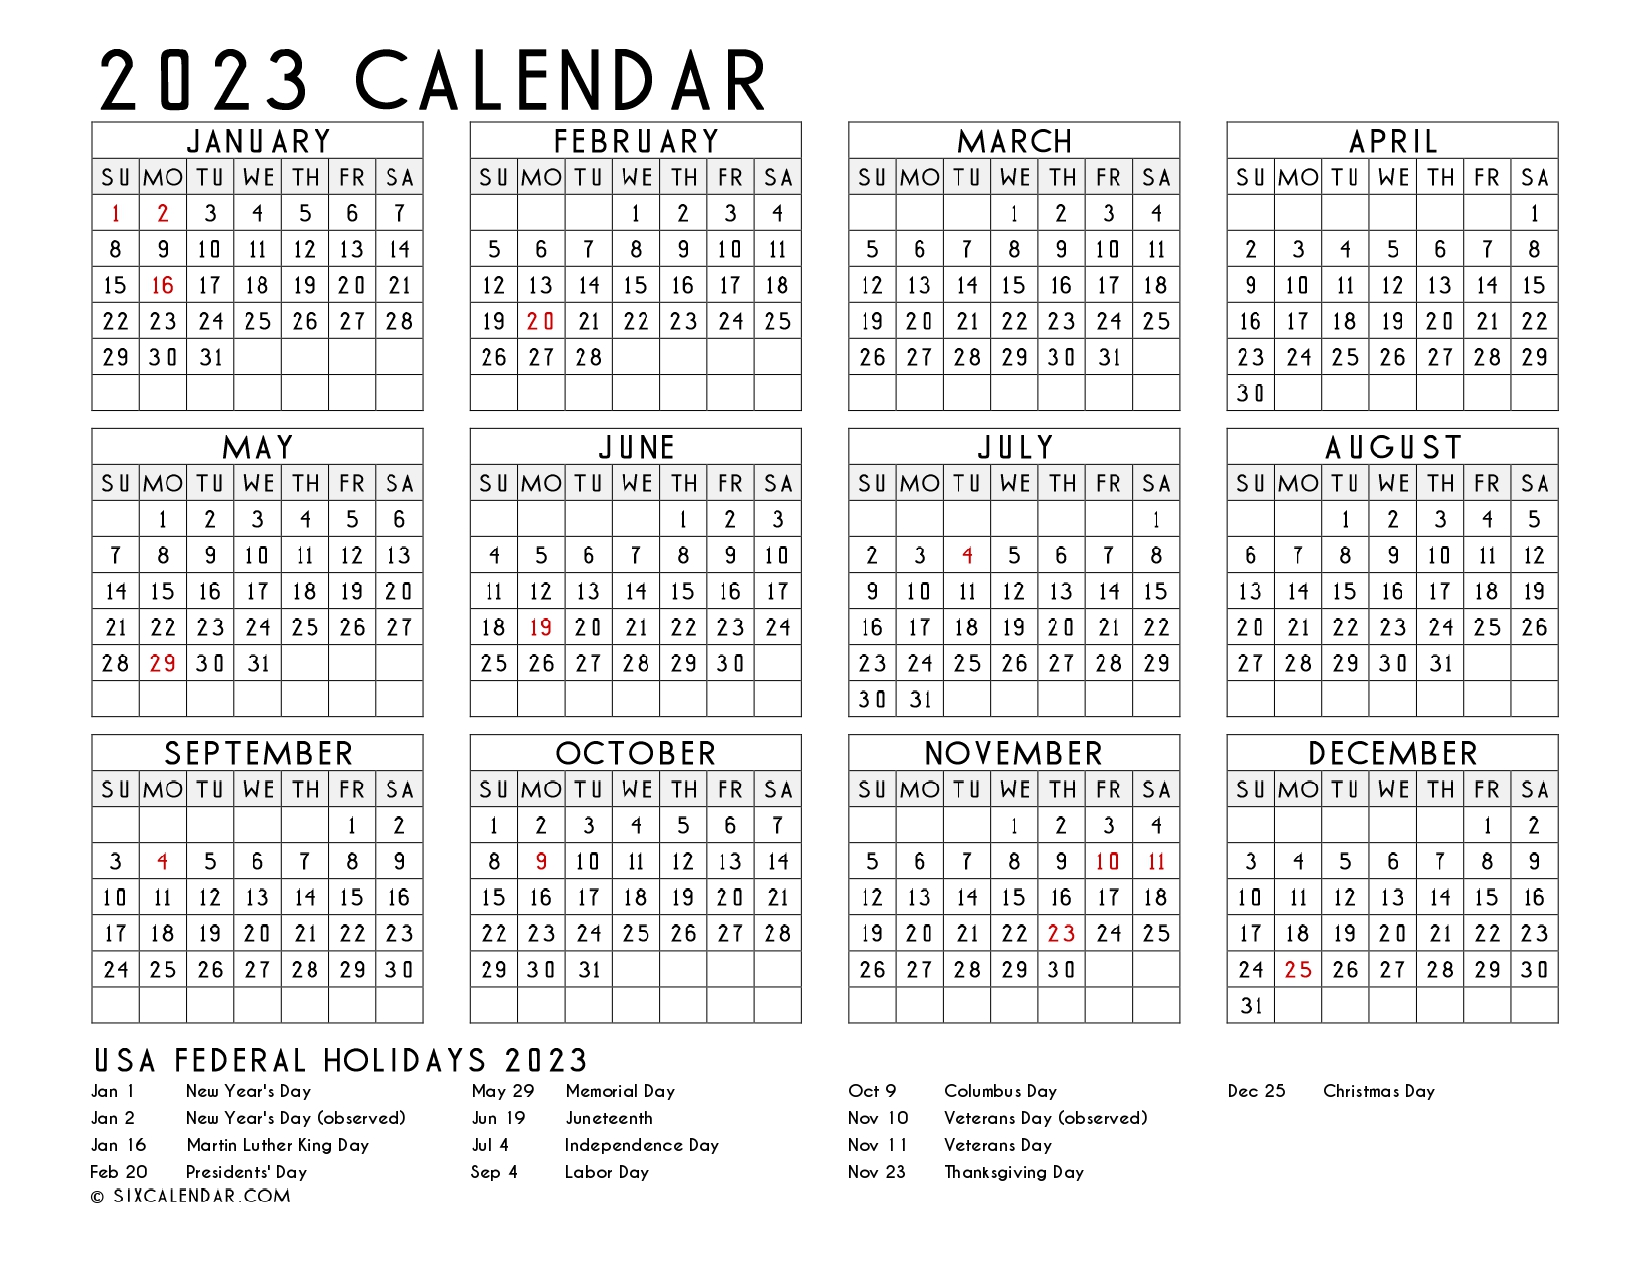 How to Print 2023 Calendar Printable One Page?